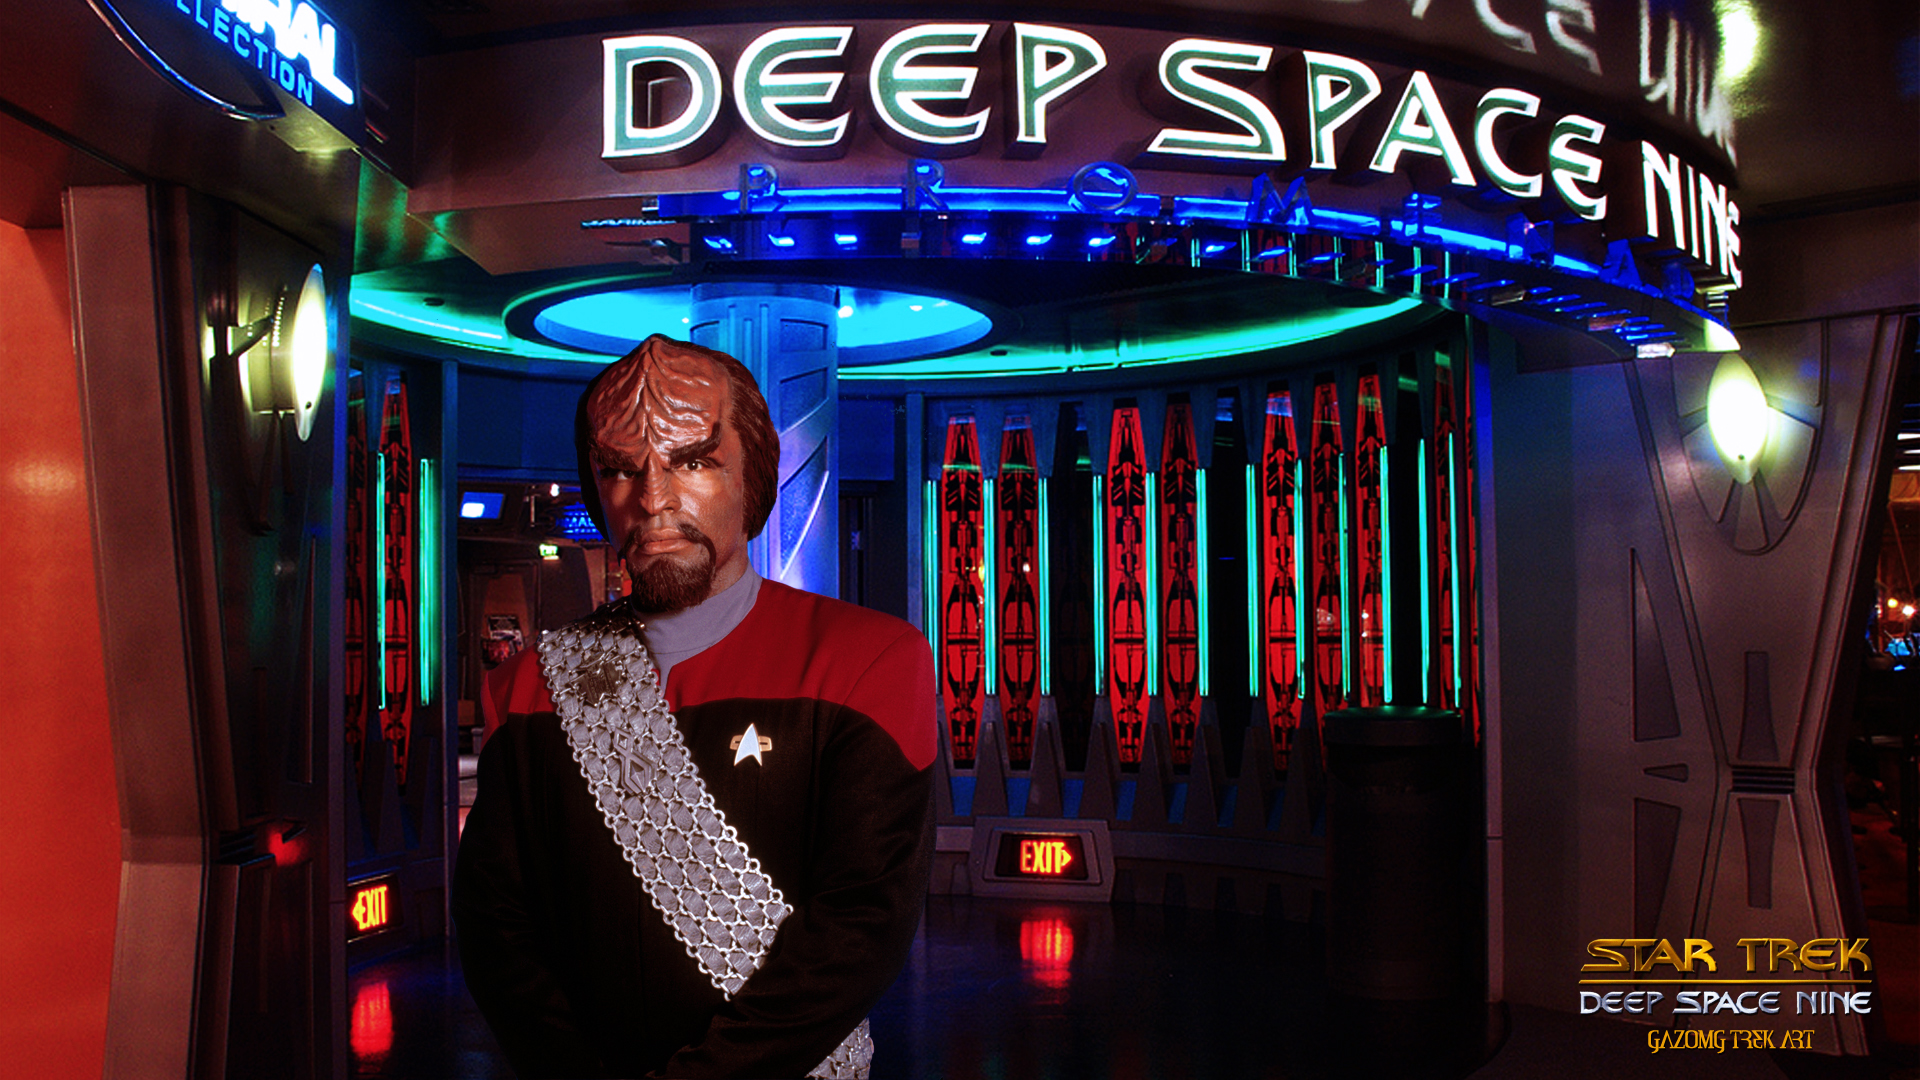 Star Trek Deep Space Nine Crew #1 Worf by gazomg on DeviantArt